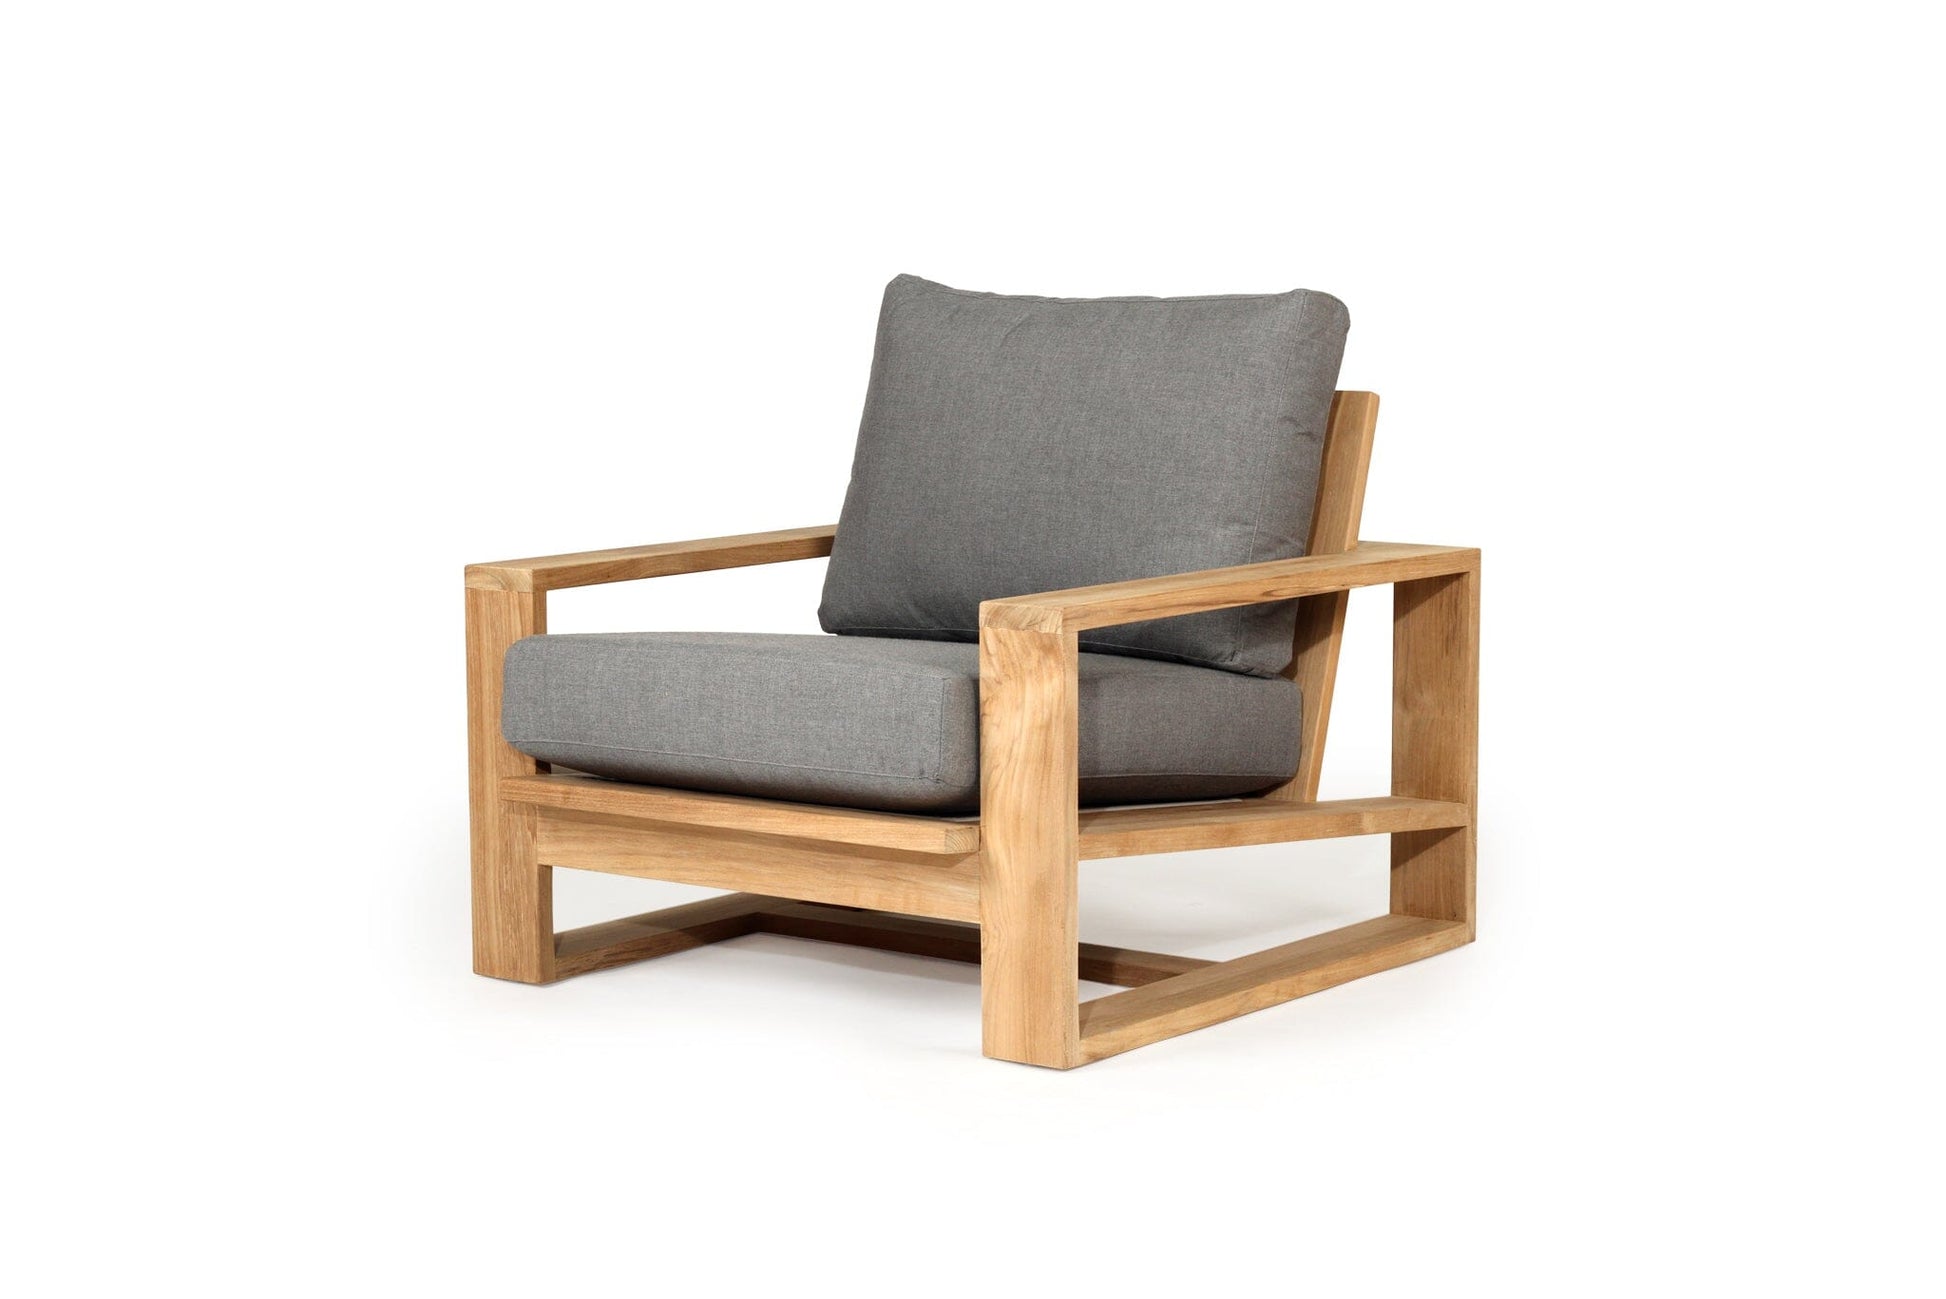 1 Seat Coastal Sofa Chair - Bora Bora Sun Republic 